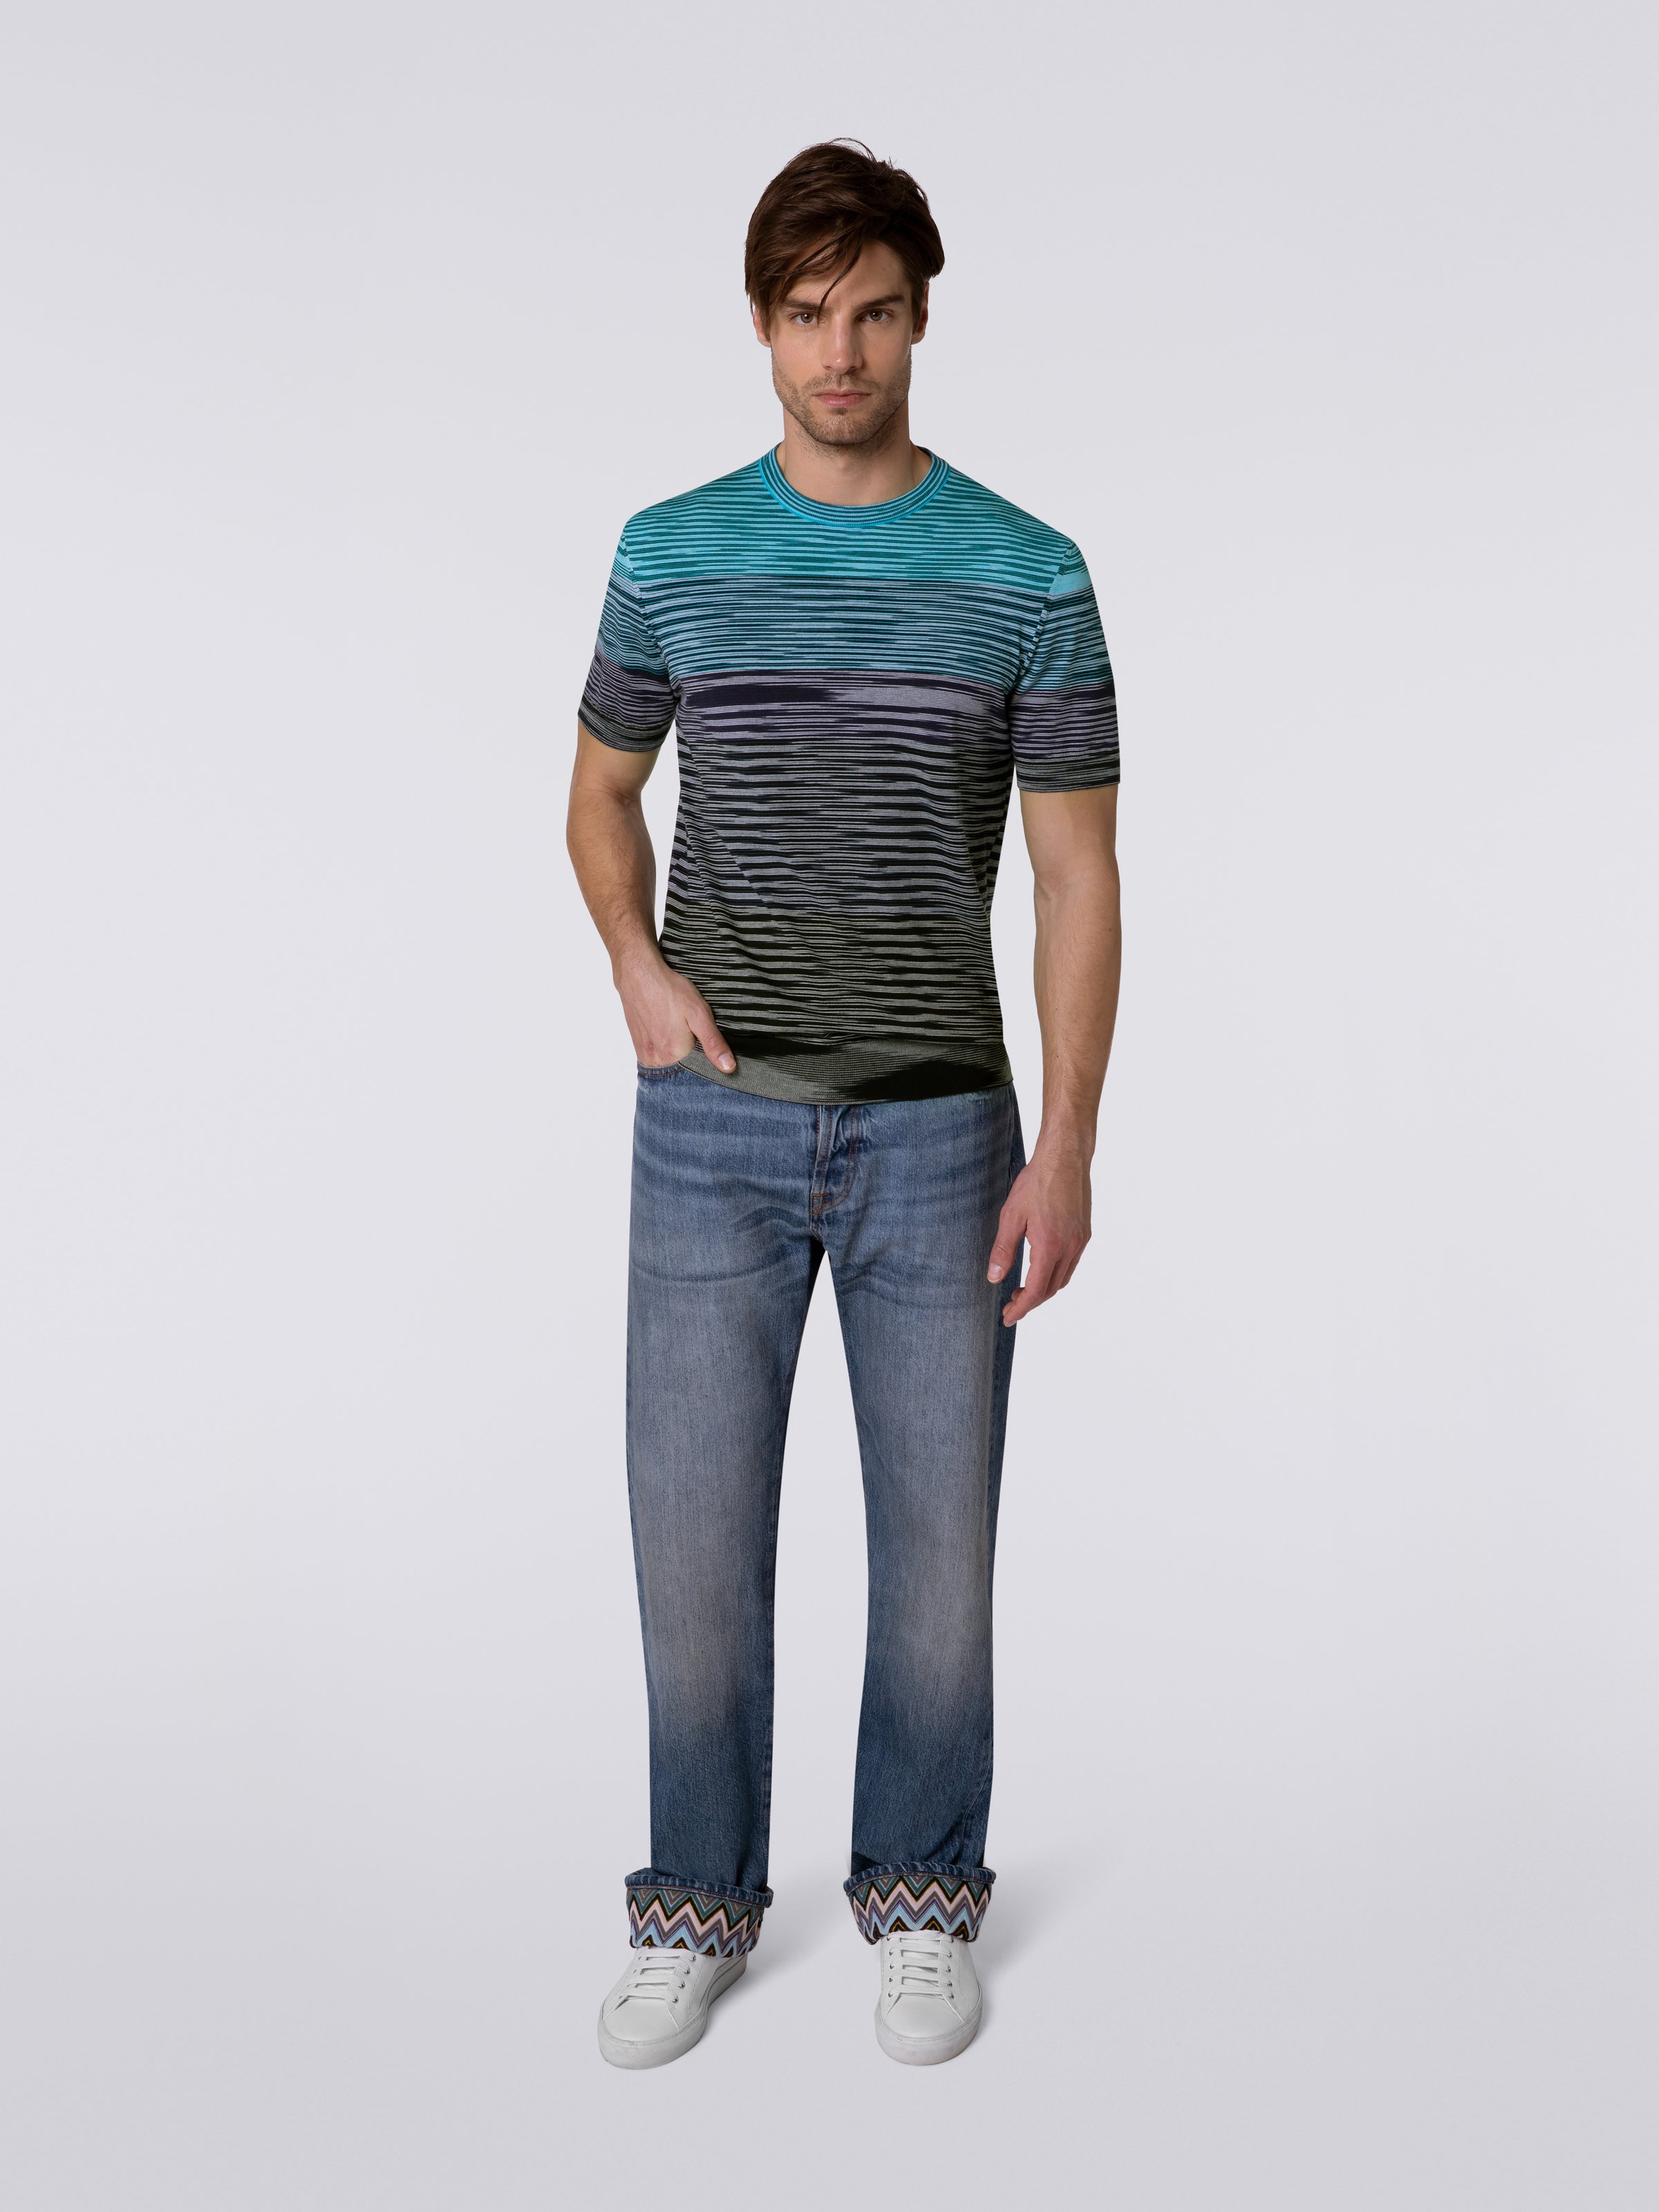 Short-sleeved crew-neck T-shirt in cotton knit with dégradé stripes, Blue, Purple & Black - 1